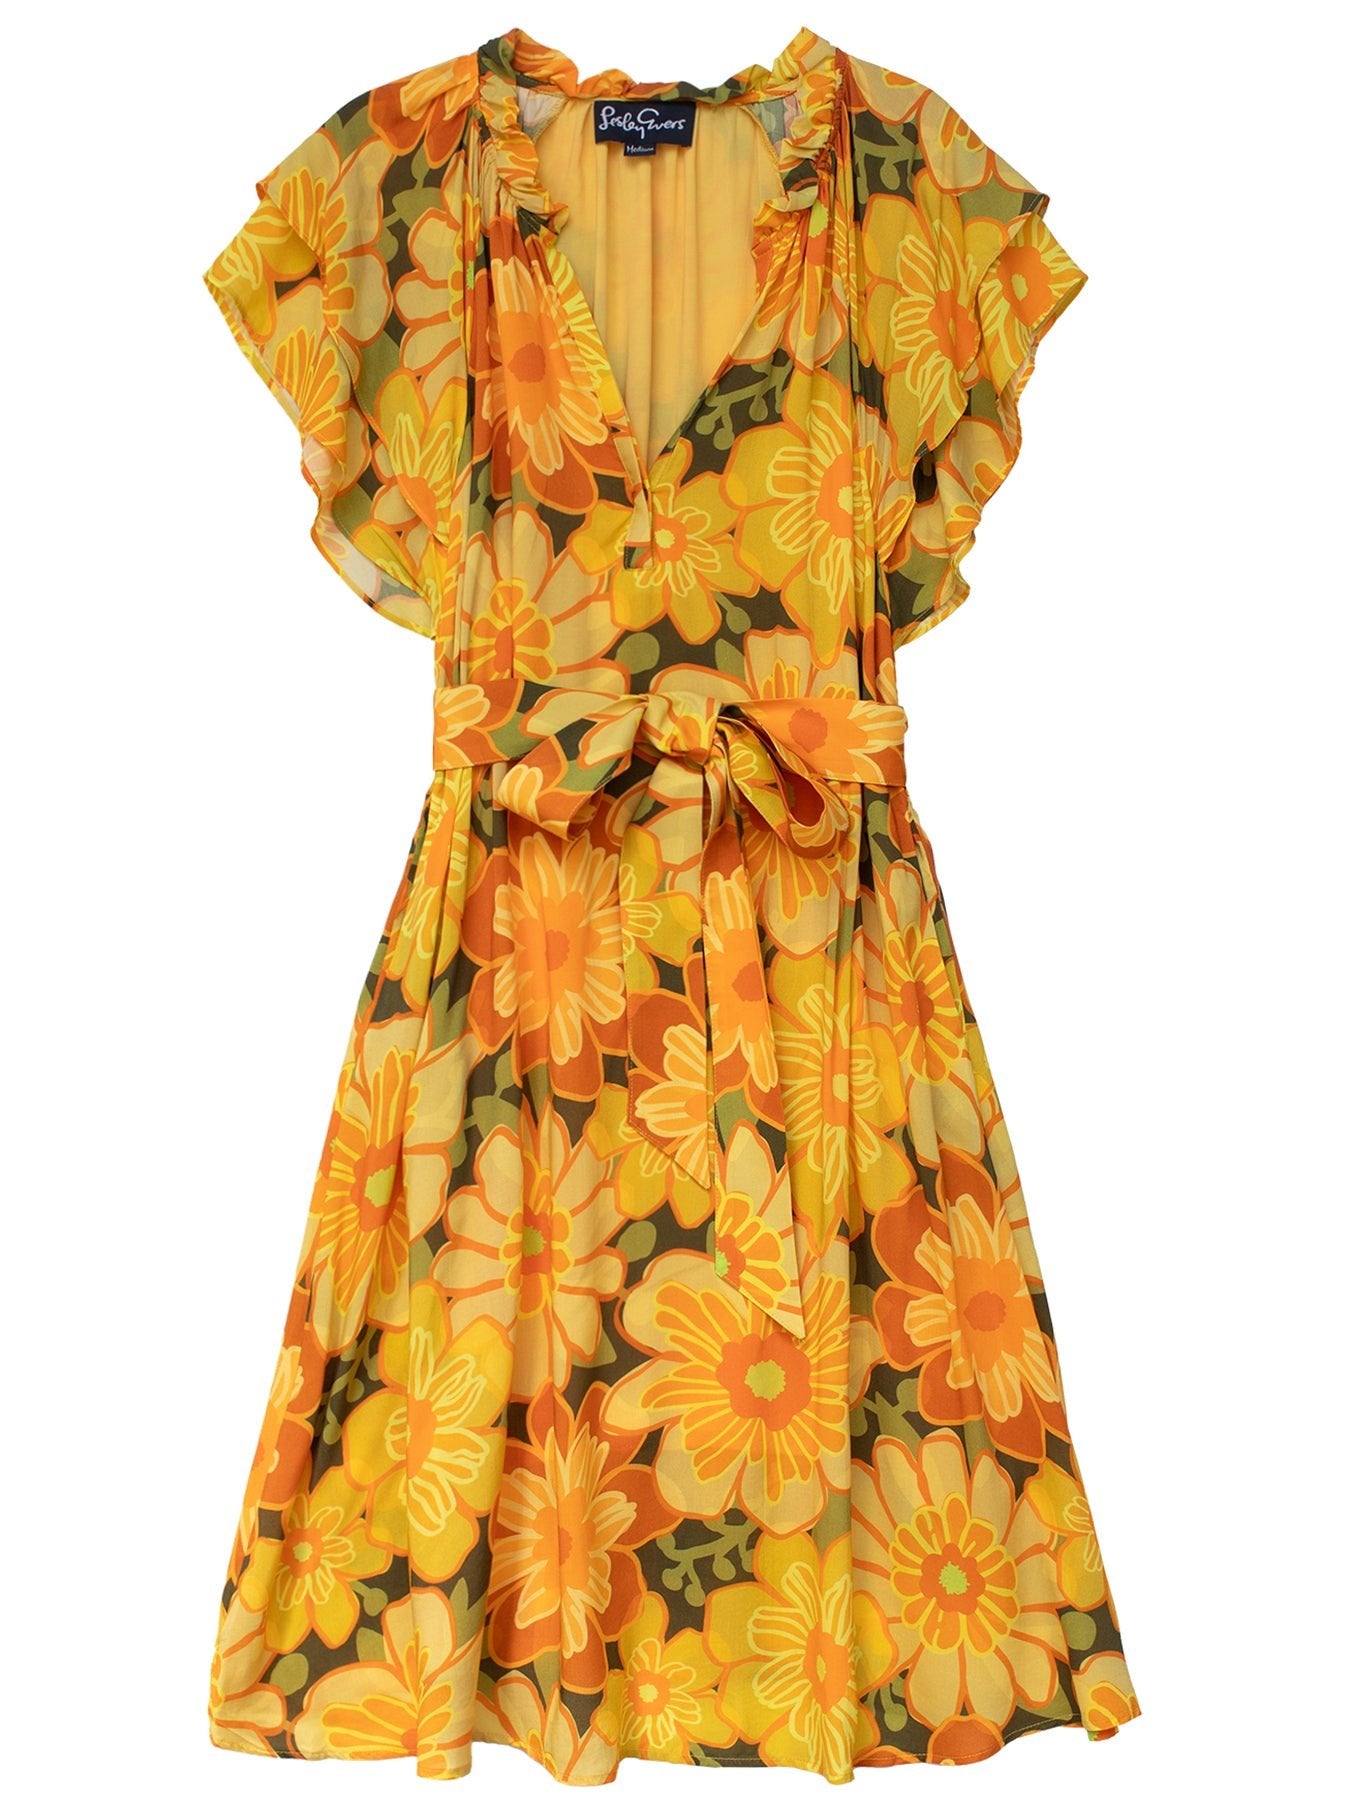 MATILDA Camellia - Lesley Evers - ARDEN - Dress - Knee Length Dress